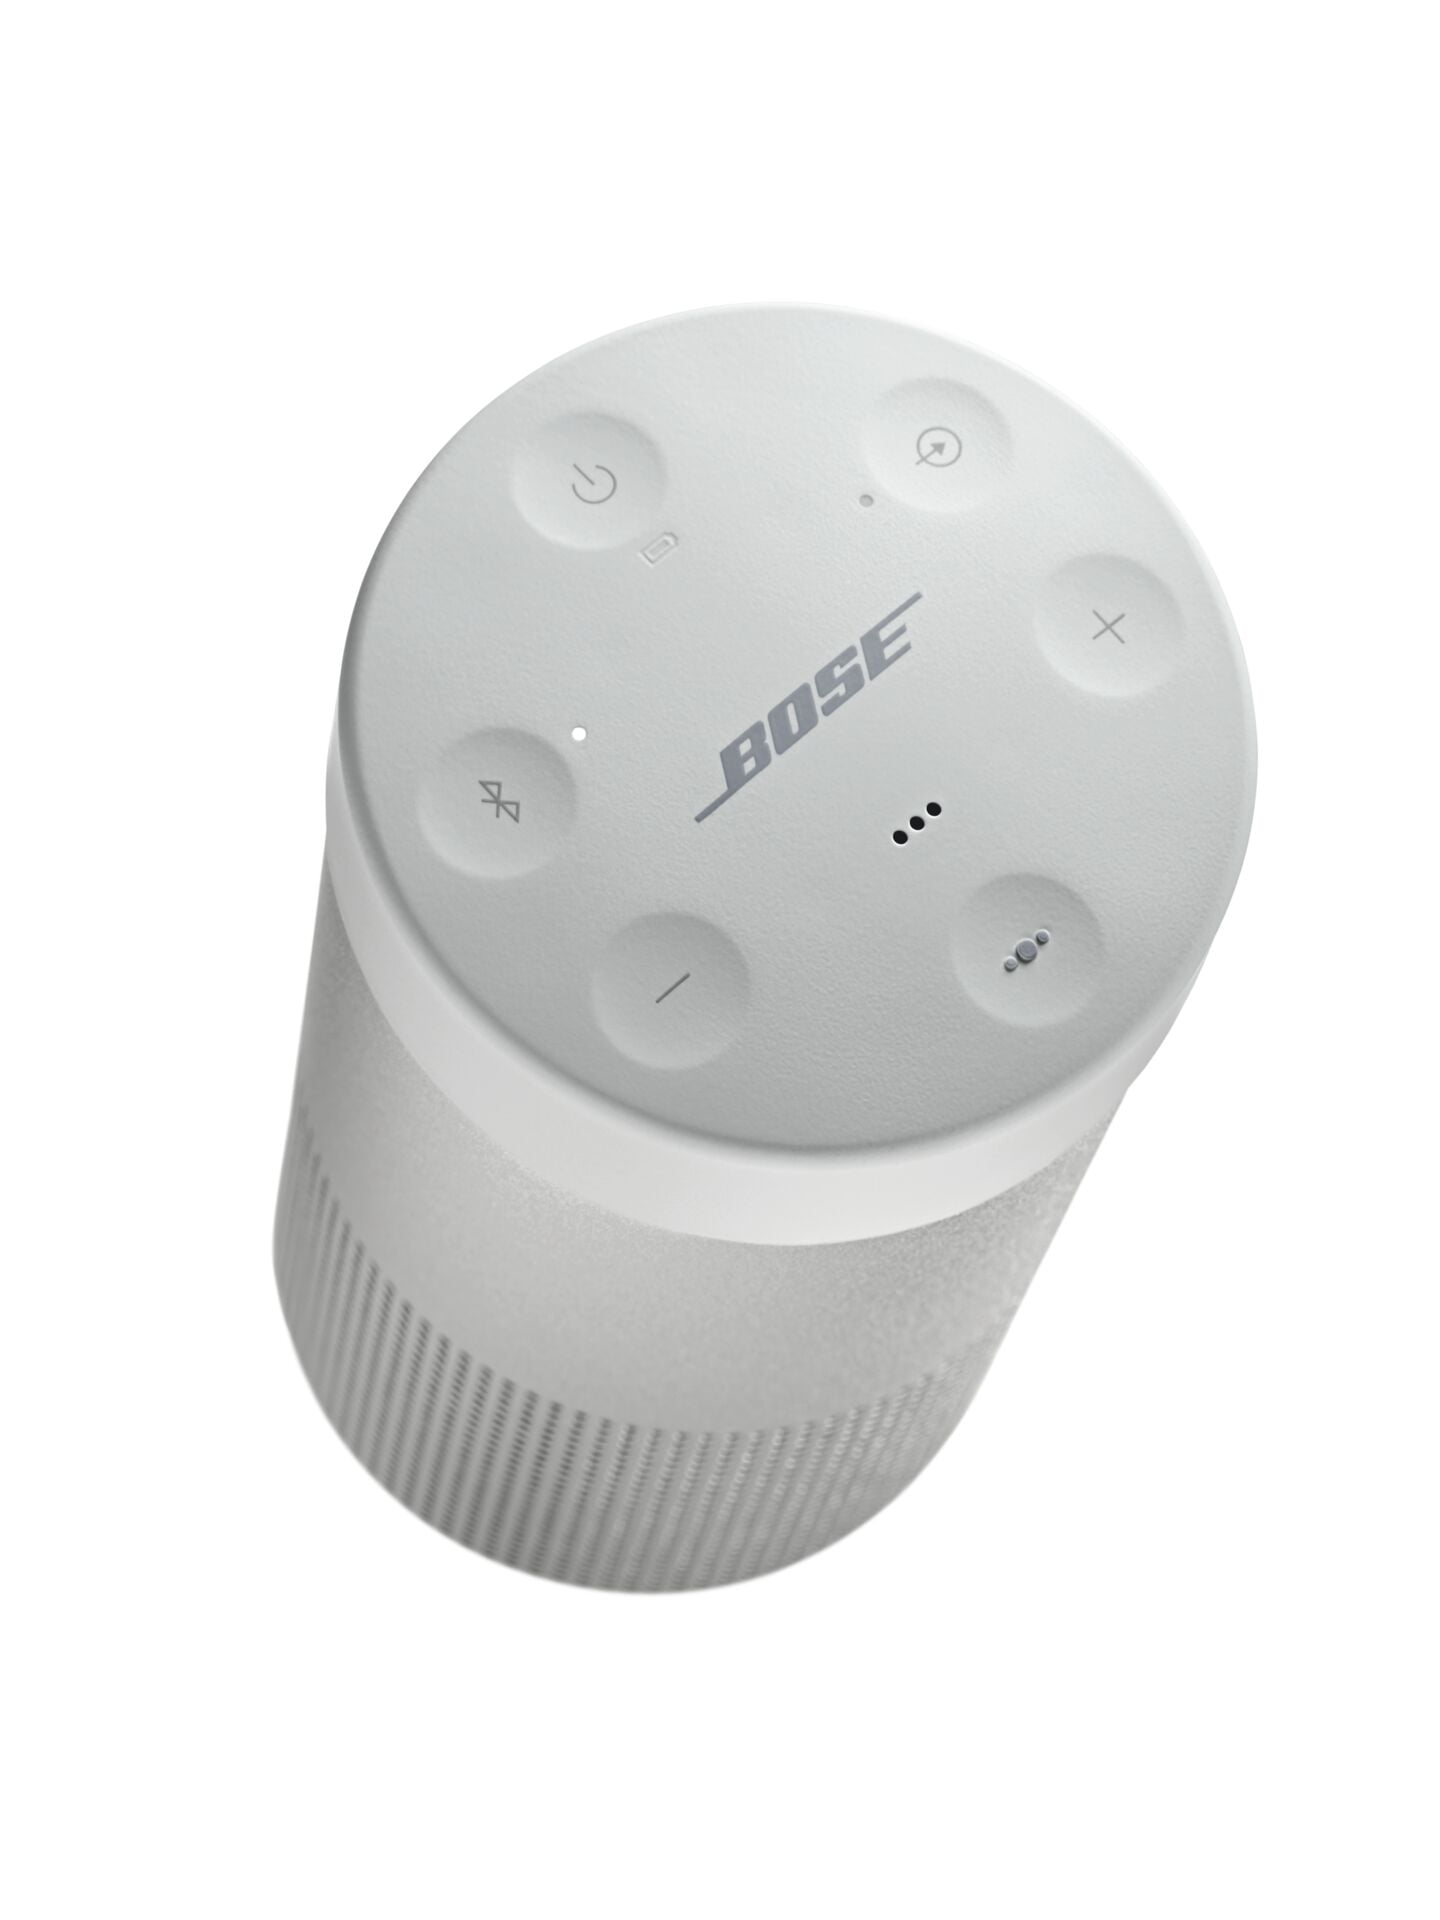 Bose SoundLink Revolve Wireless Portable Bluetooth Speaker (Series 